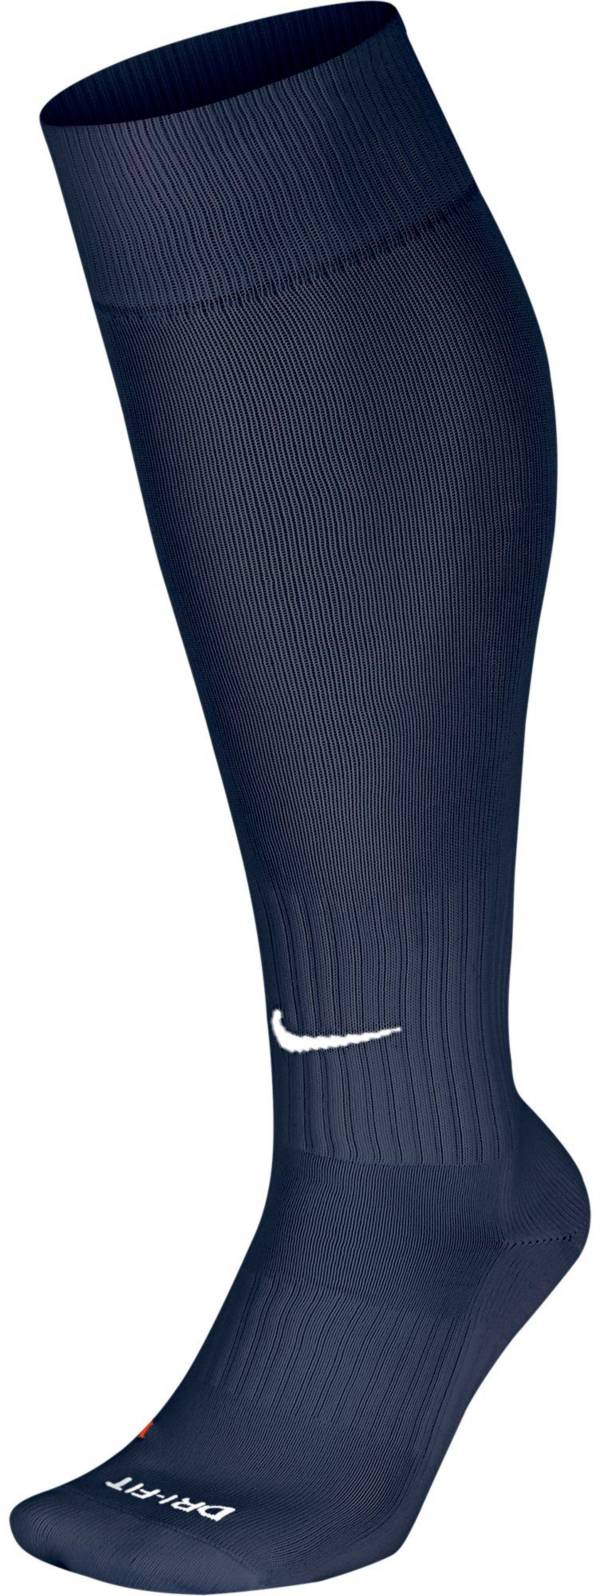 Nike Academy Over-The-Calf Soccer Socks product image